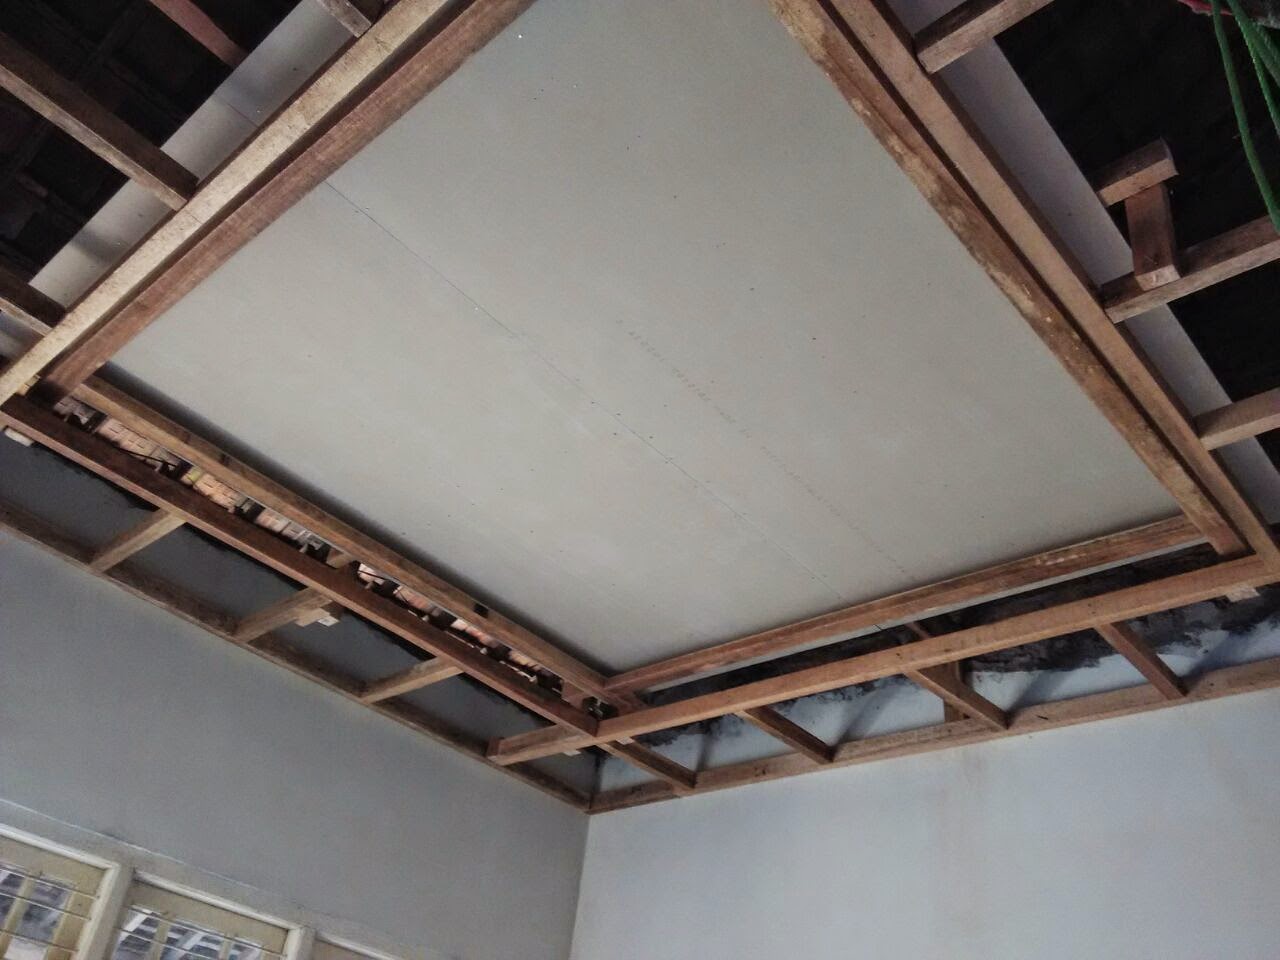  kalsiboard: Mana lebih baik kayu atau besi hollow untuk rangka atap